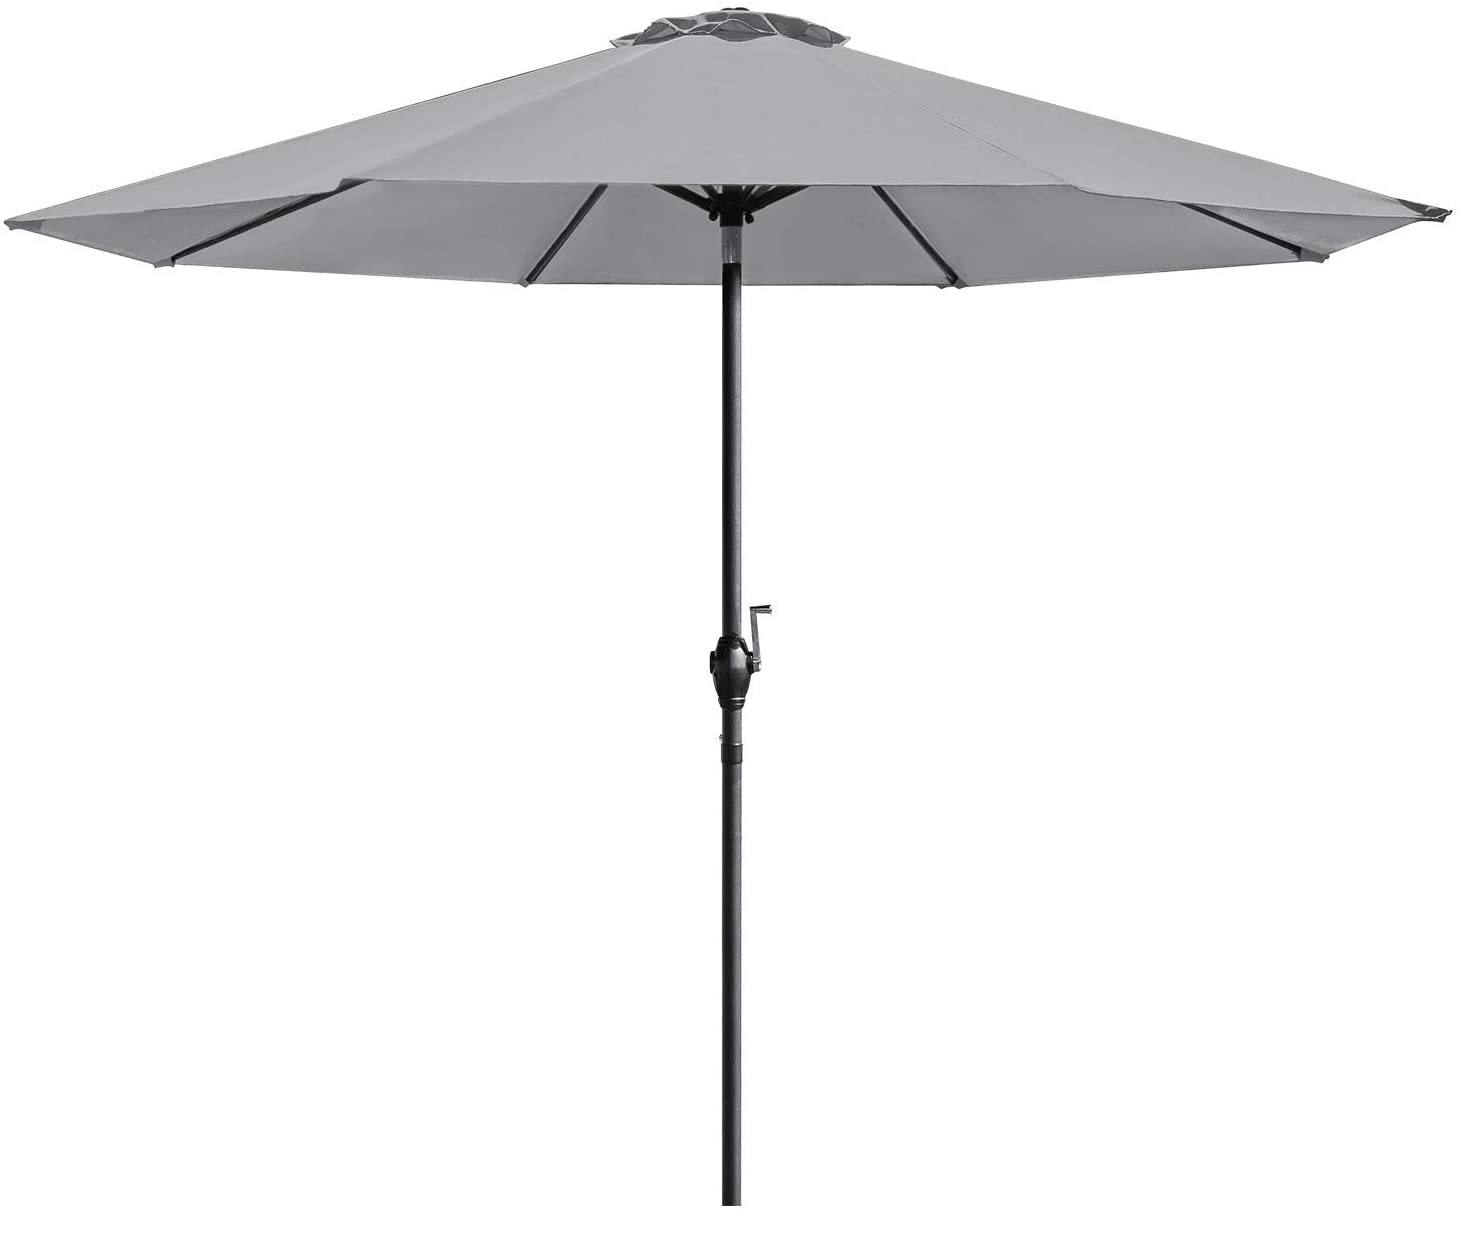 Homall 9 FT Patio Umbrella 